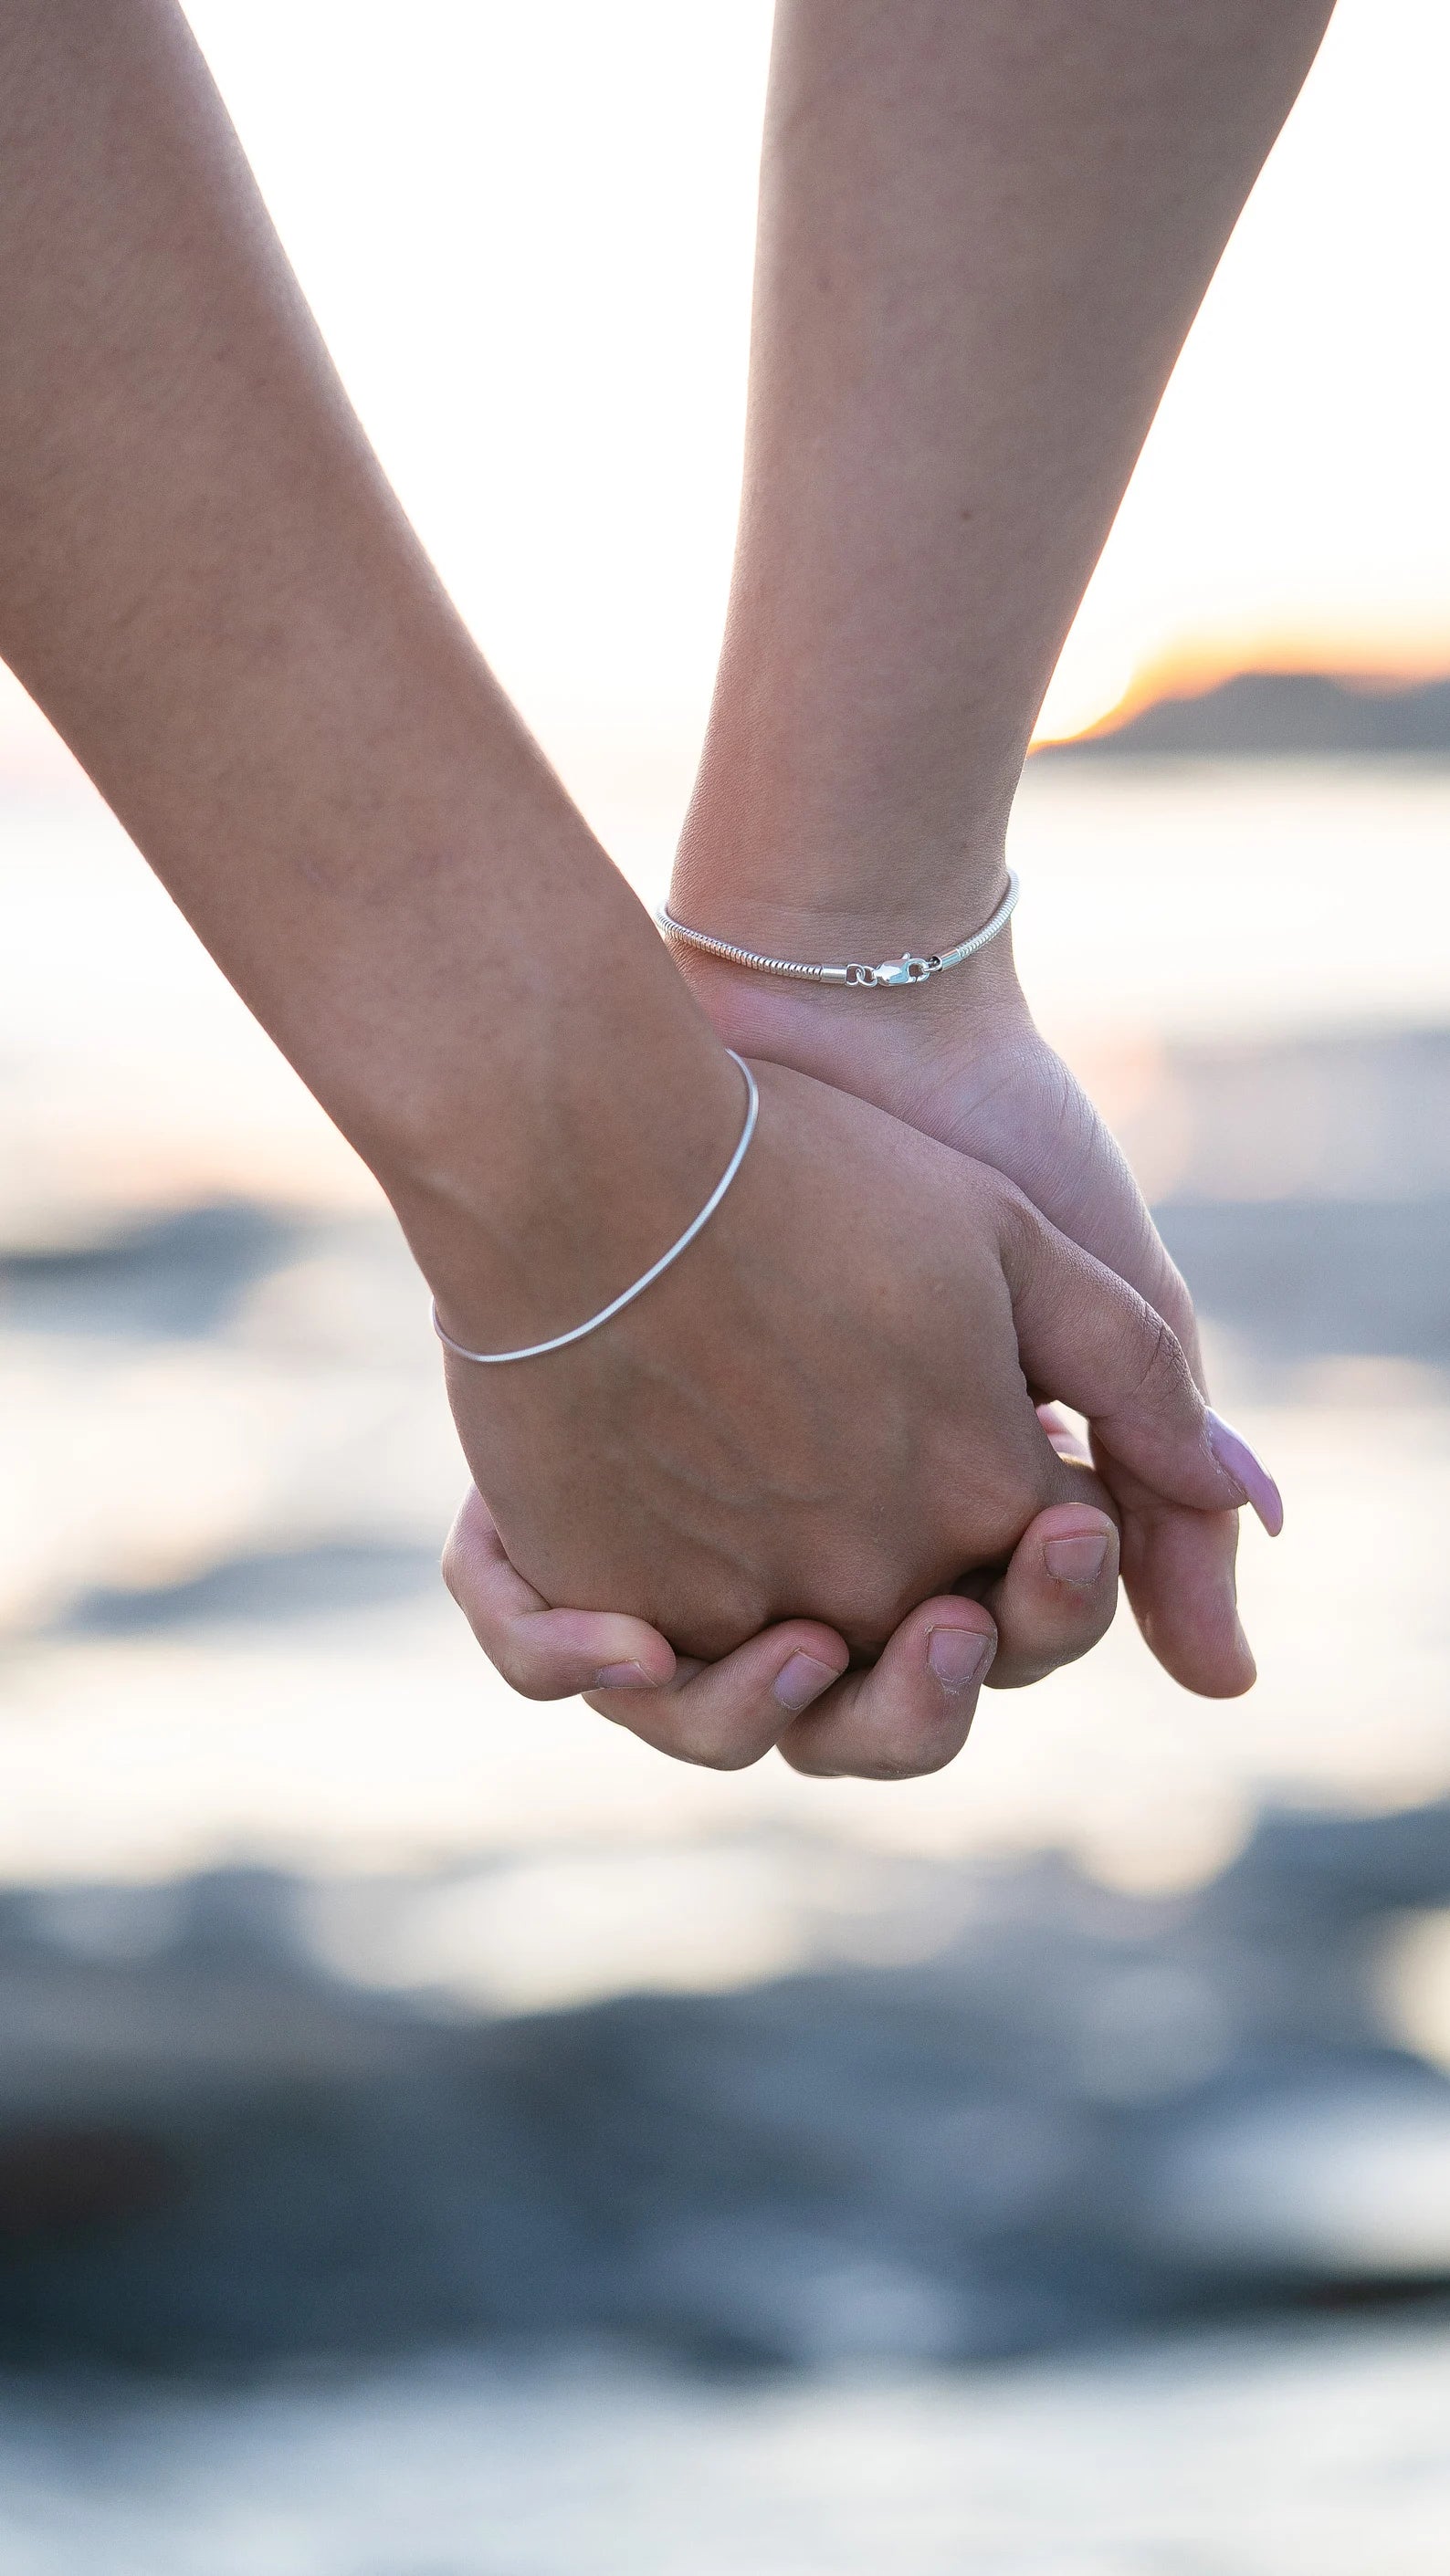 Rimoni Silver Couples Bracelets – The Silver Essence